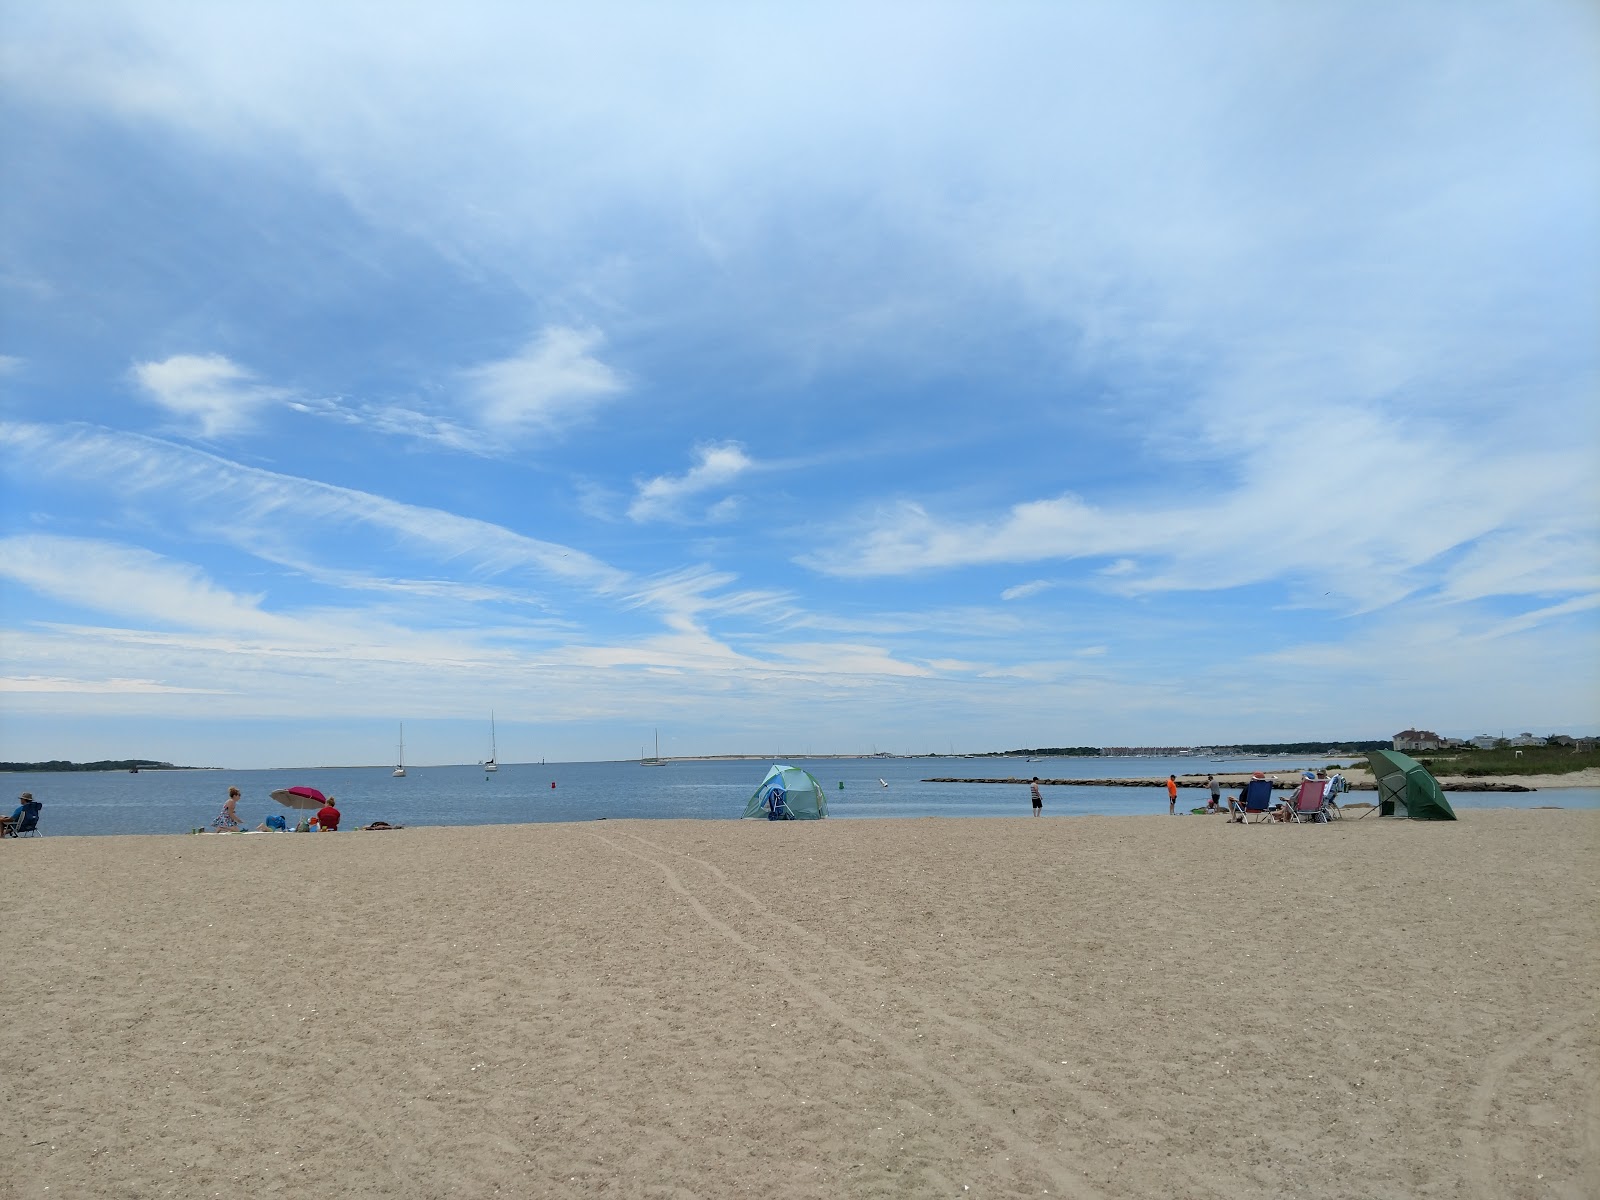 Foto de Colonial Acres Beach - lugar popular entre os apreciadores de relaxamento